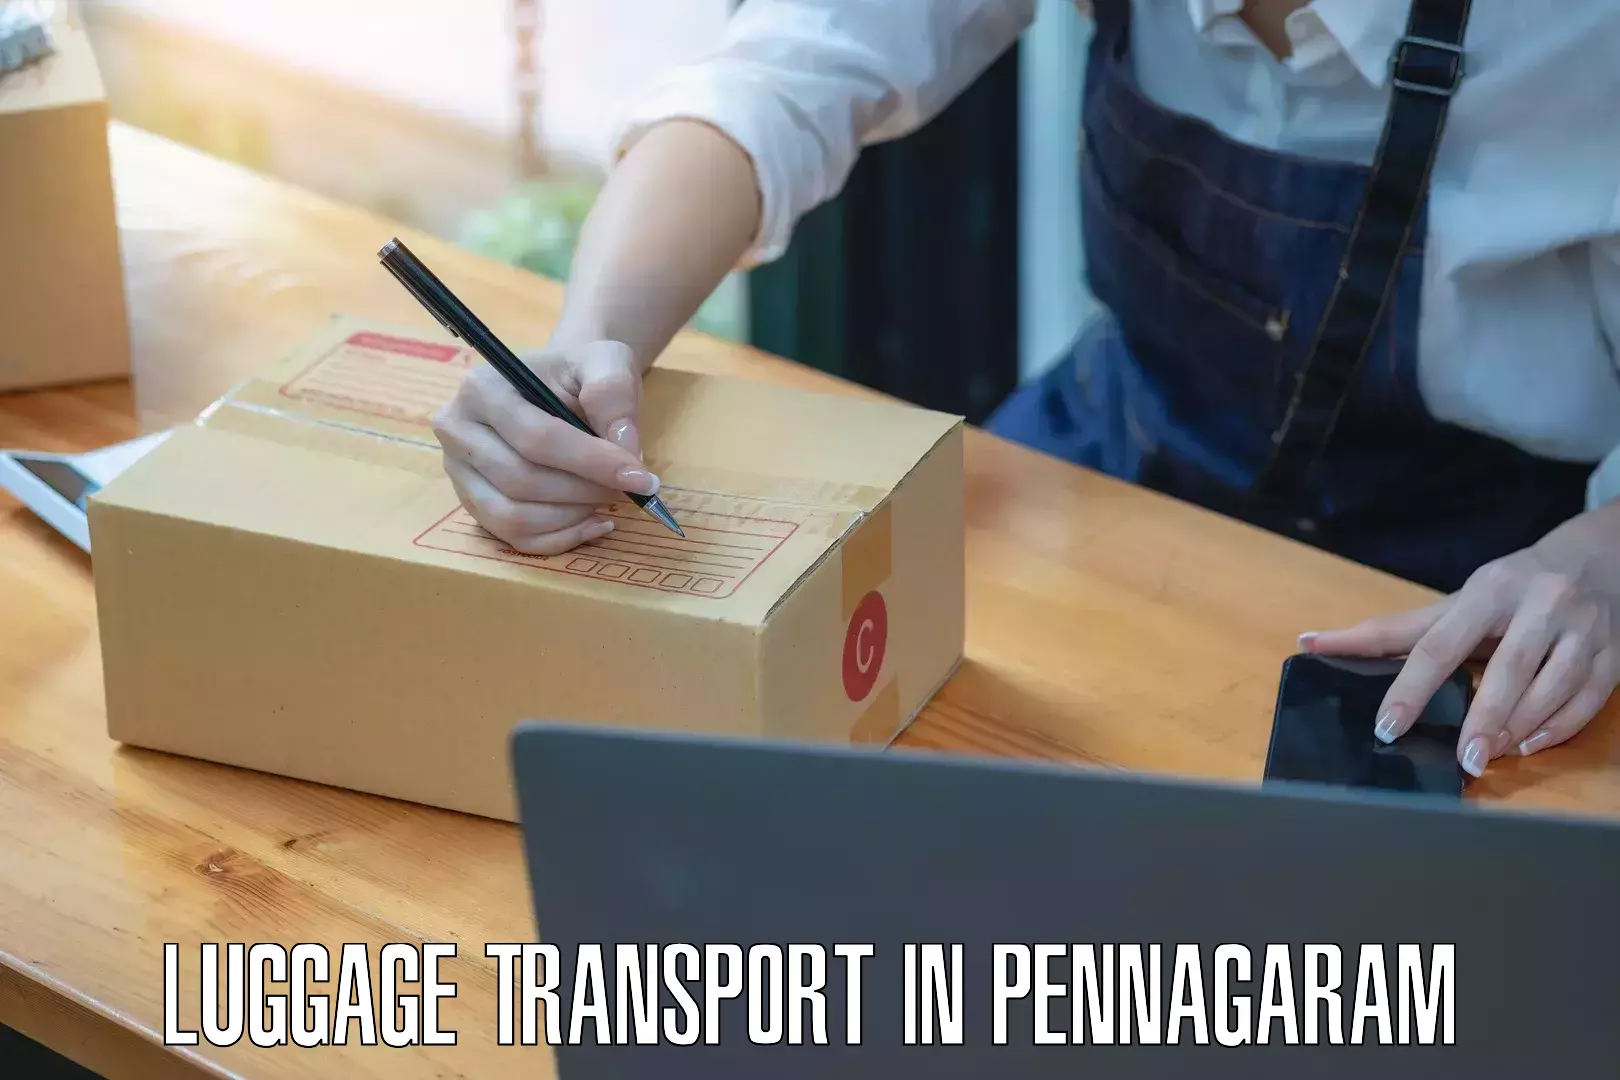 Hassle-free luggage shipping in Pennagaram